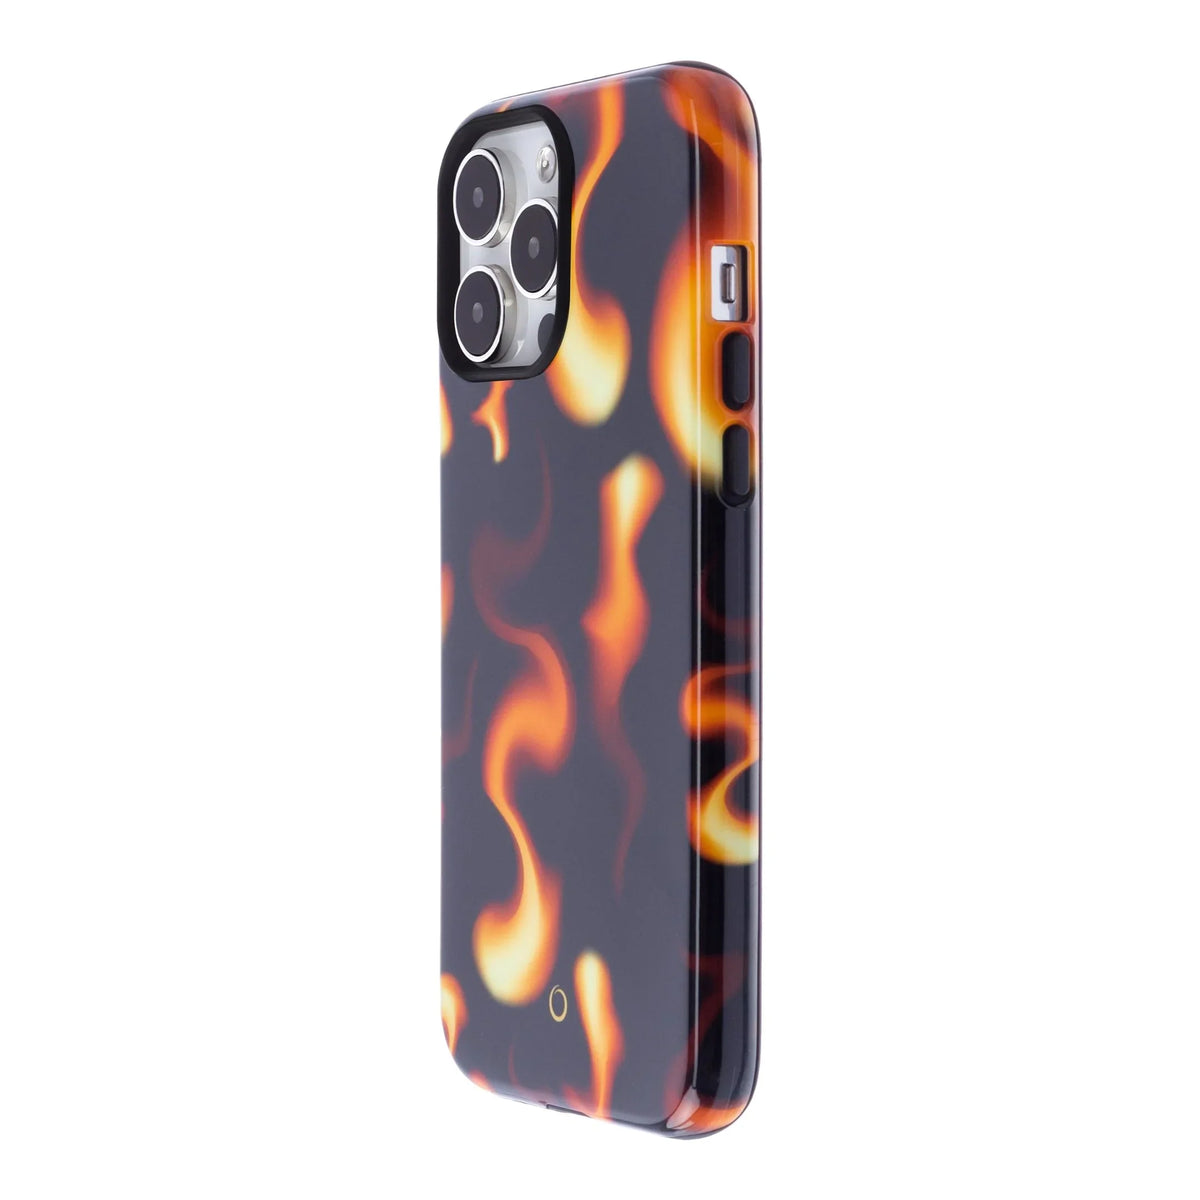 Groovy Orange Flame iPhone Case